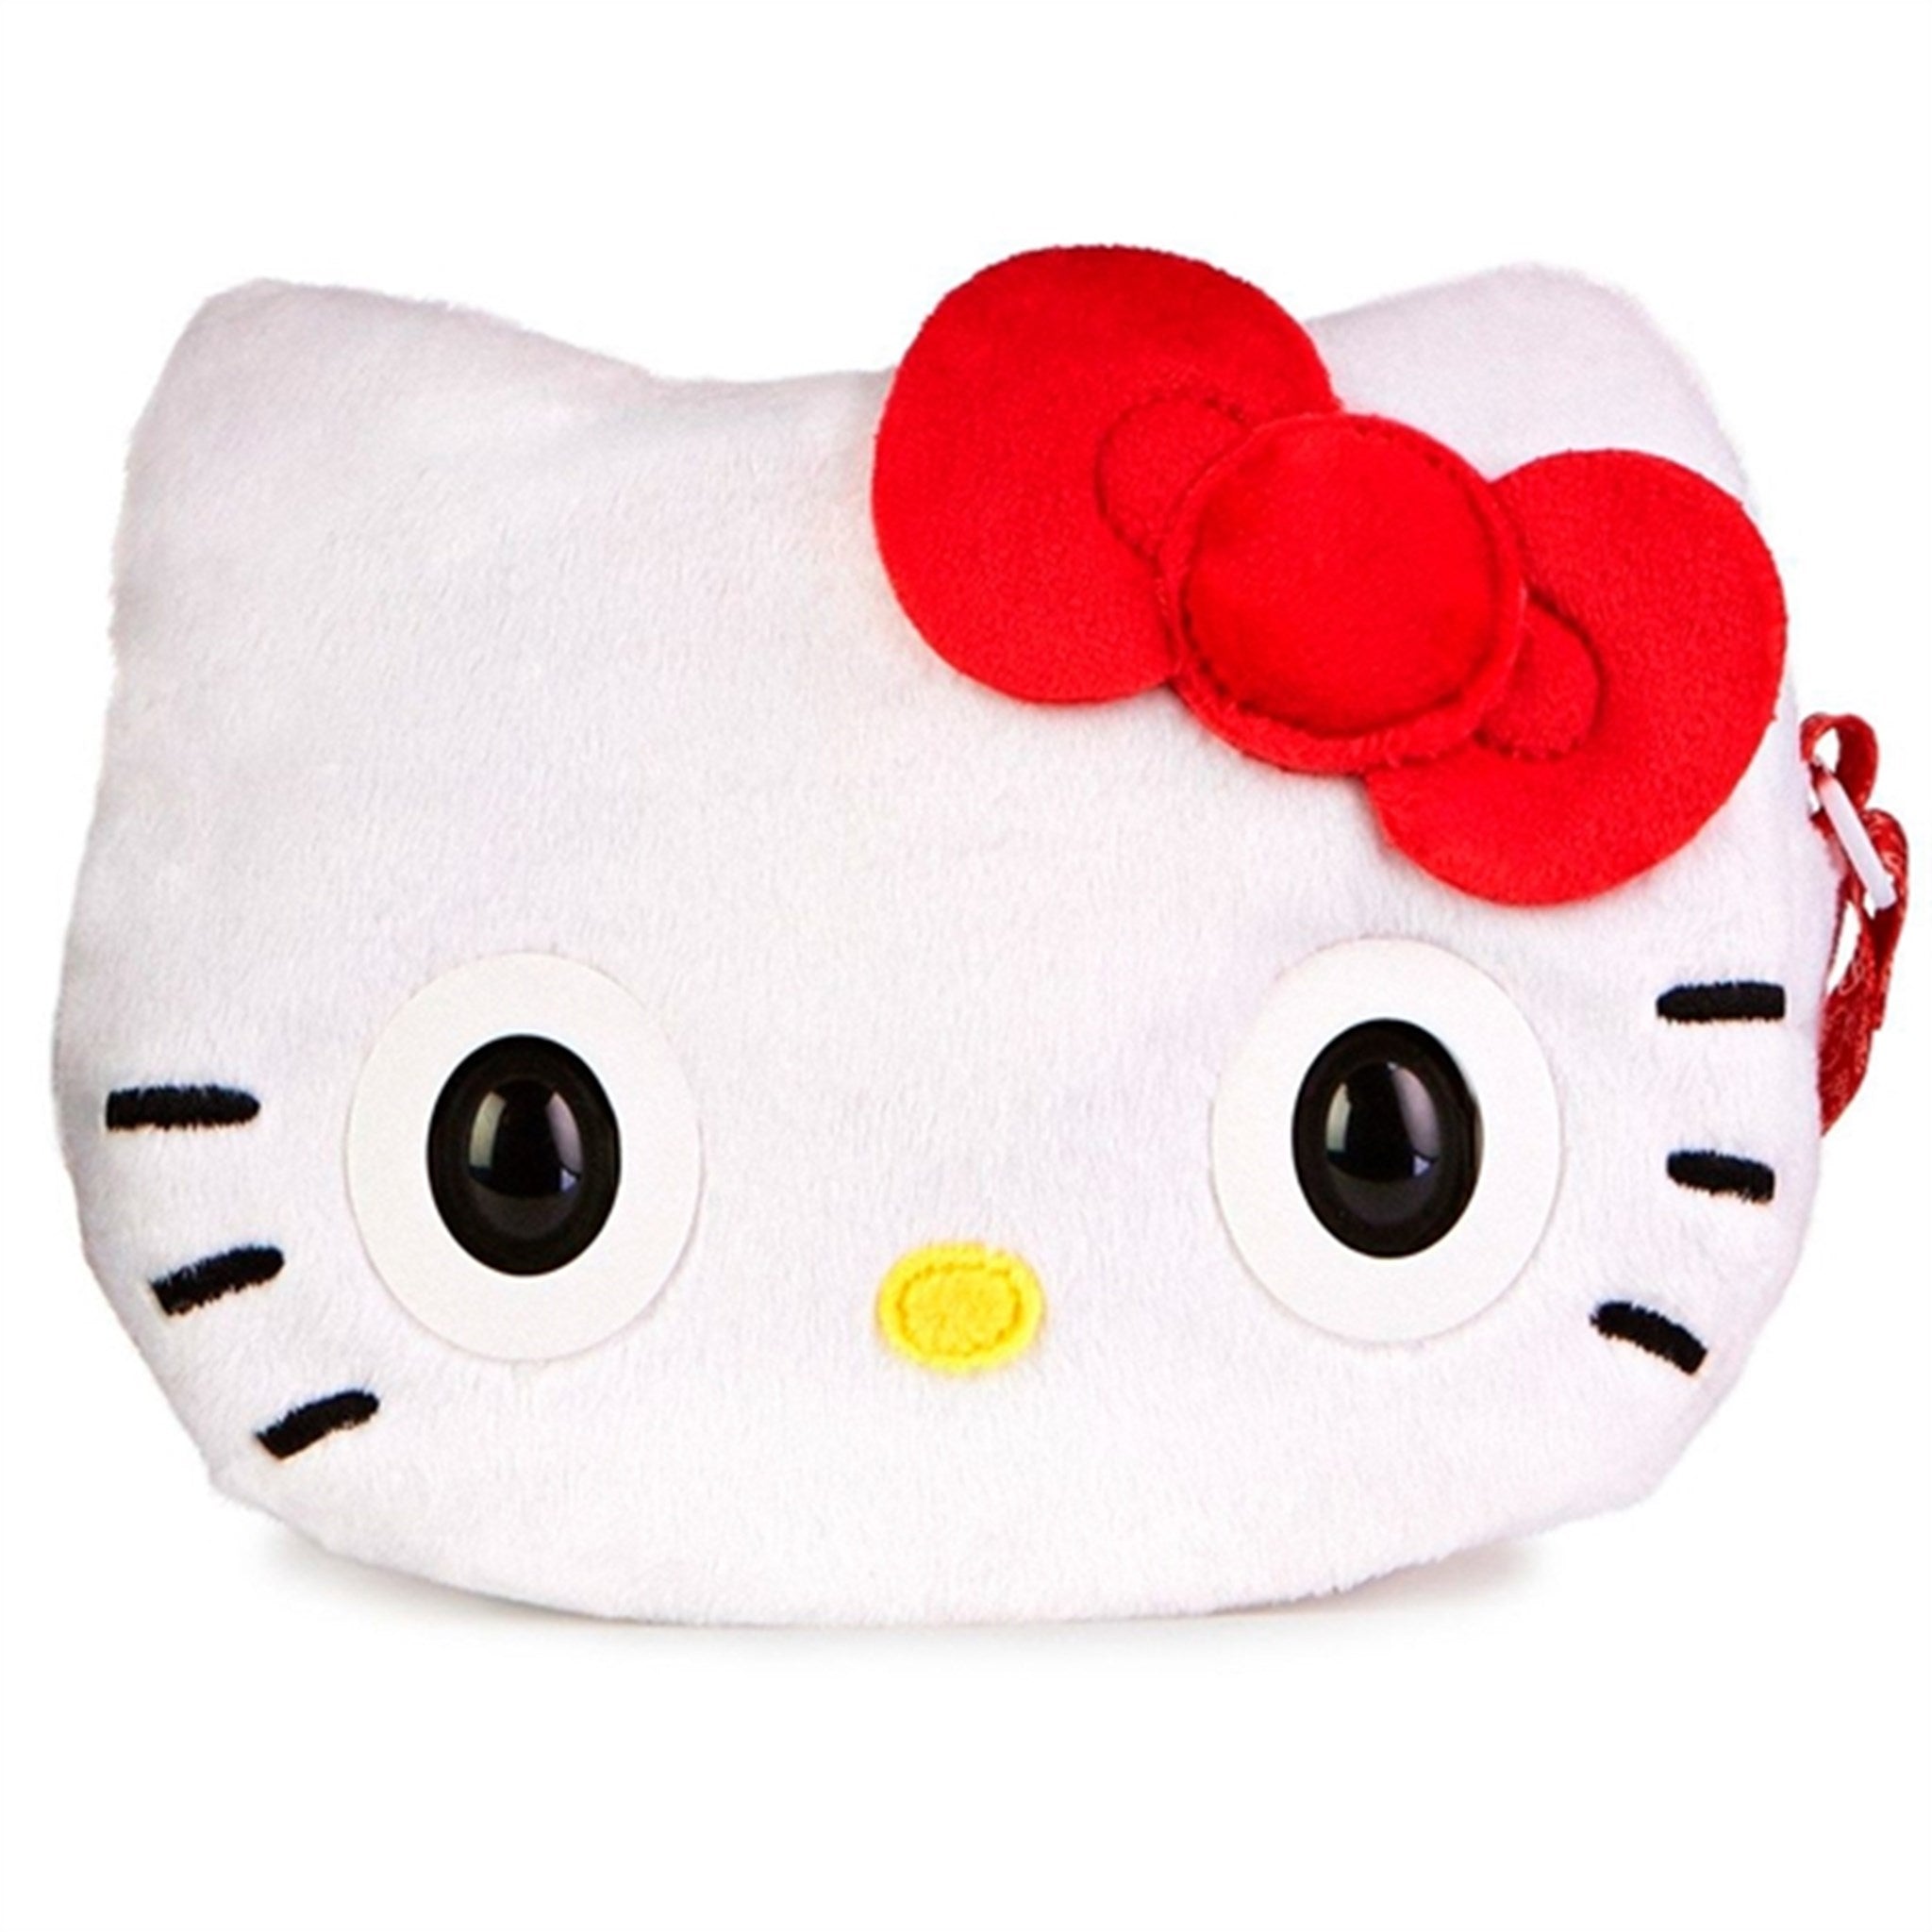 Purse Pets Sanrio Väska Hello Kitty